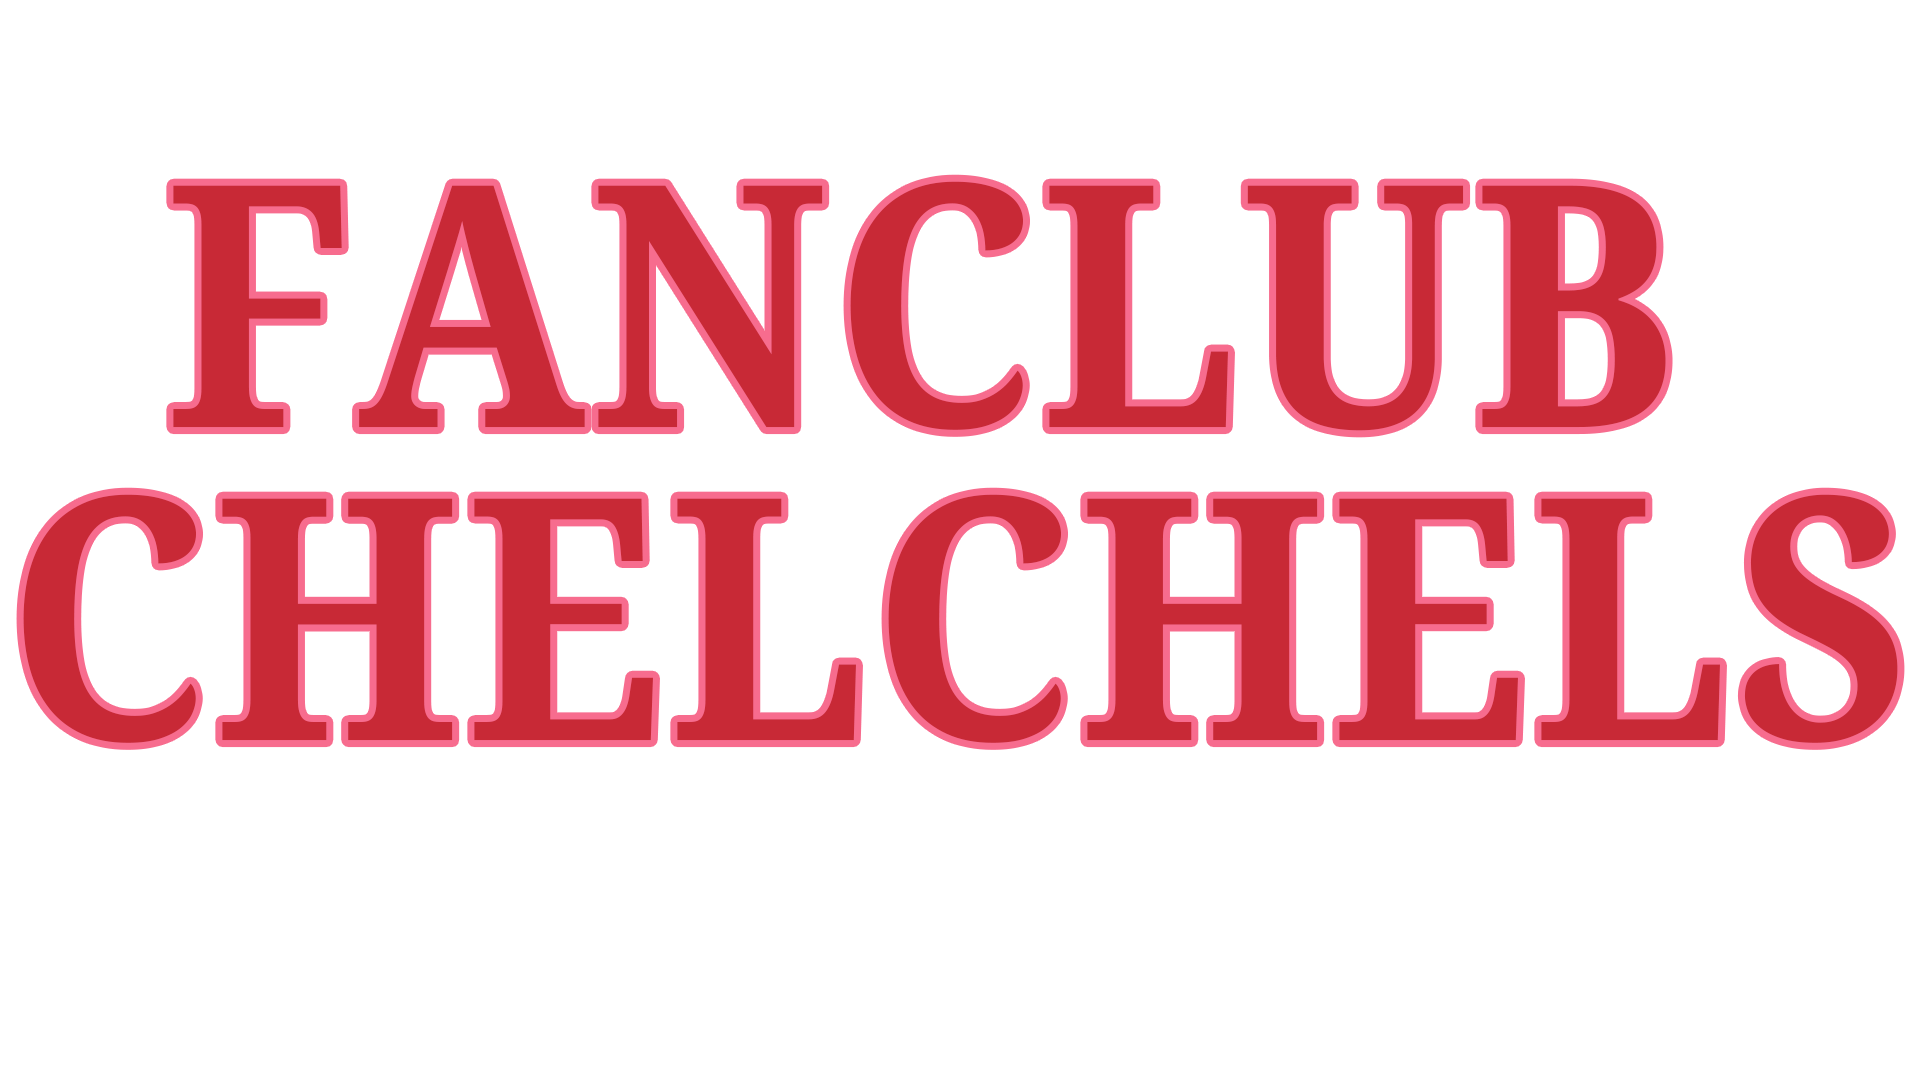 FANCLUB CHELCHELS